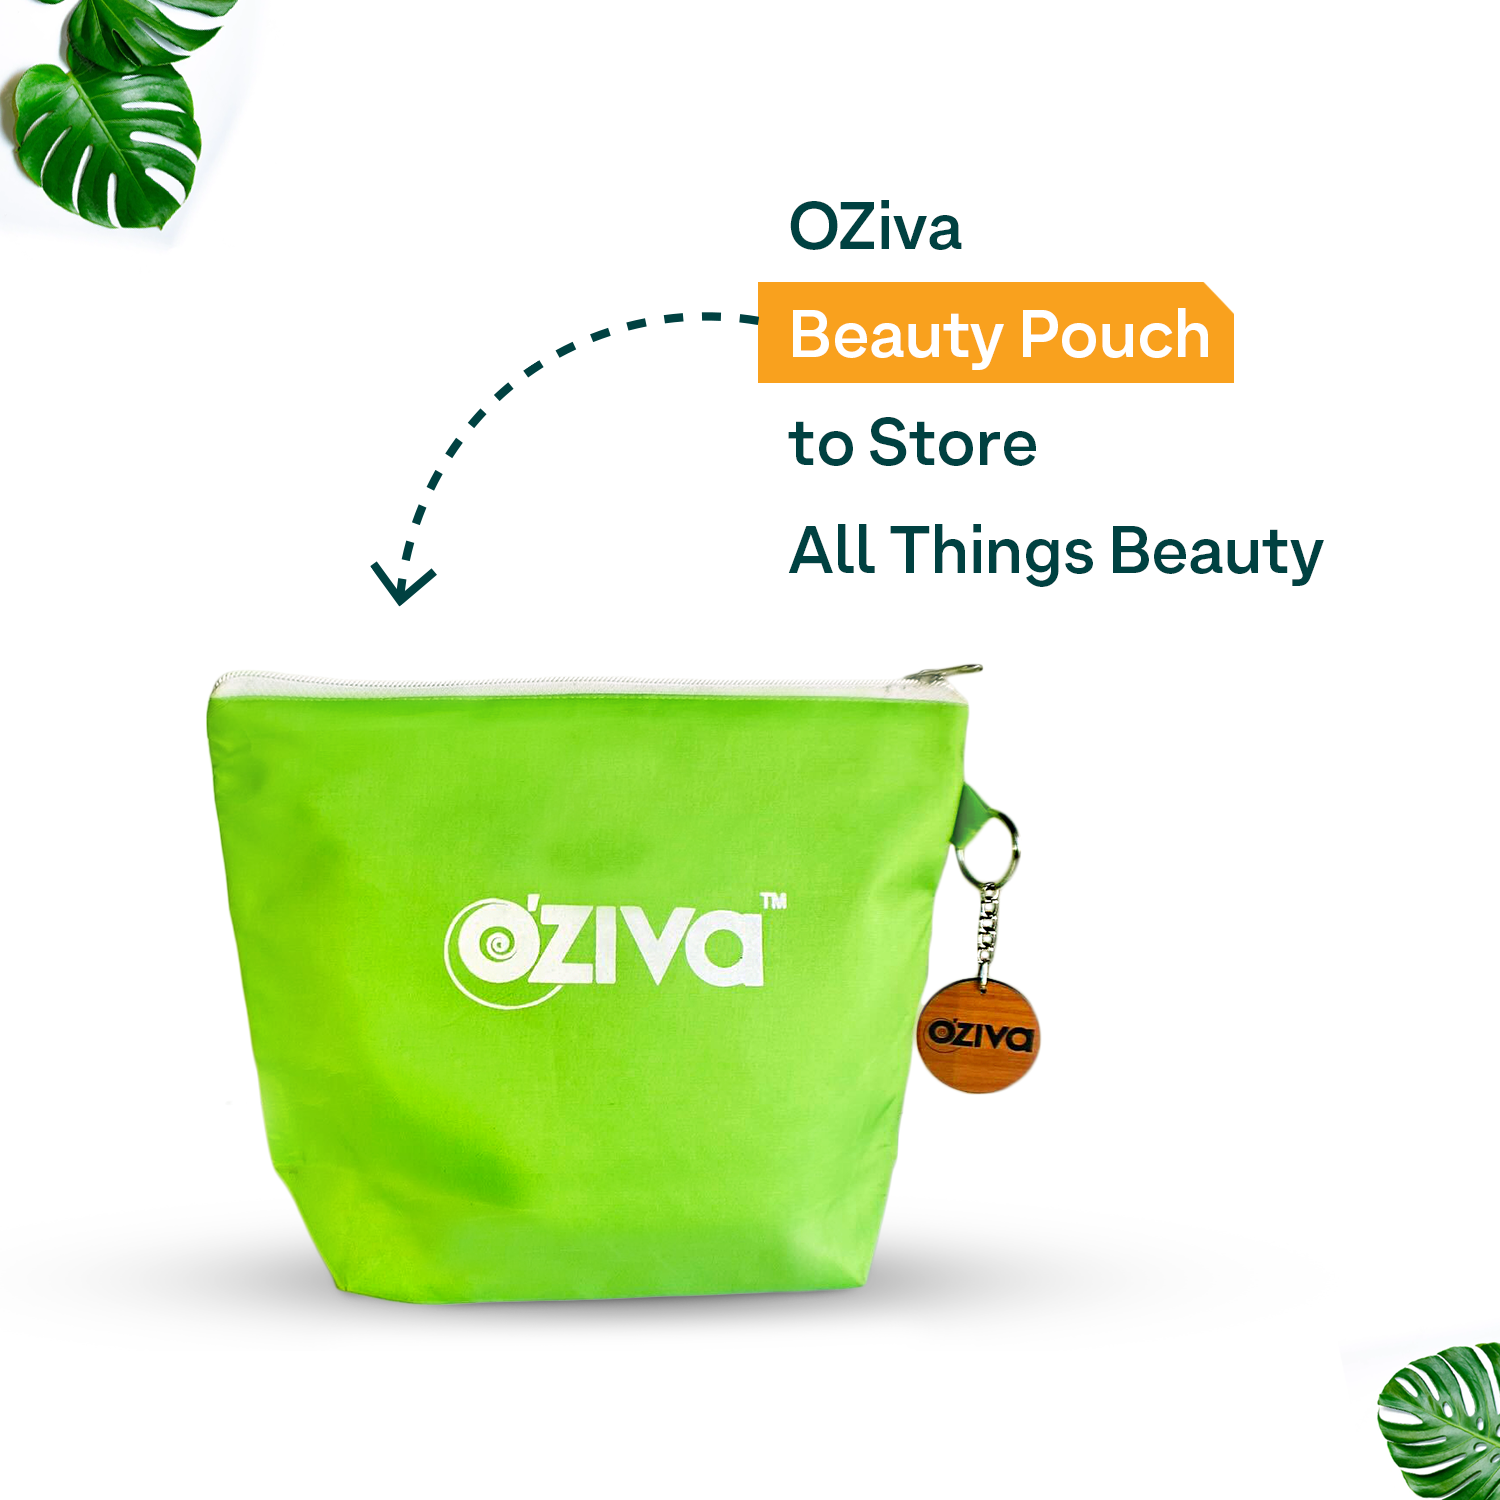 OZiva Beauty Pouch